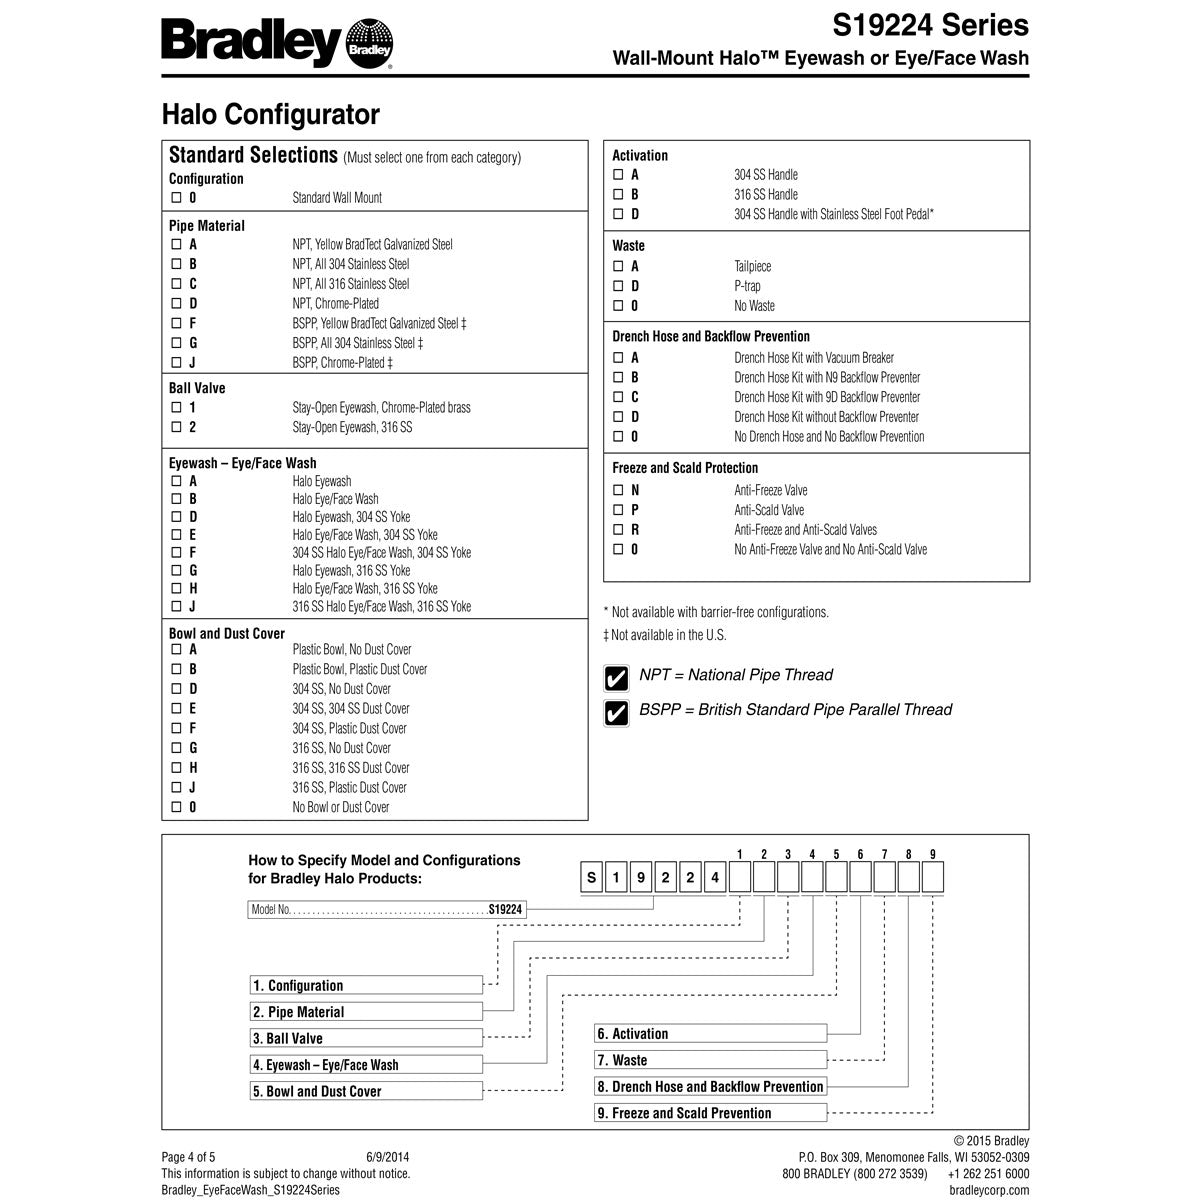 Bradley S19224BPT Eyewash, Stainless Steel Bowl, Tailpiece & P-Trap